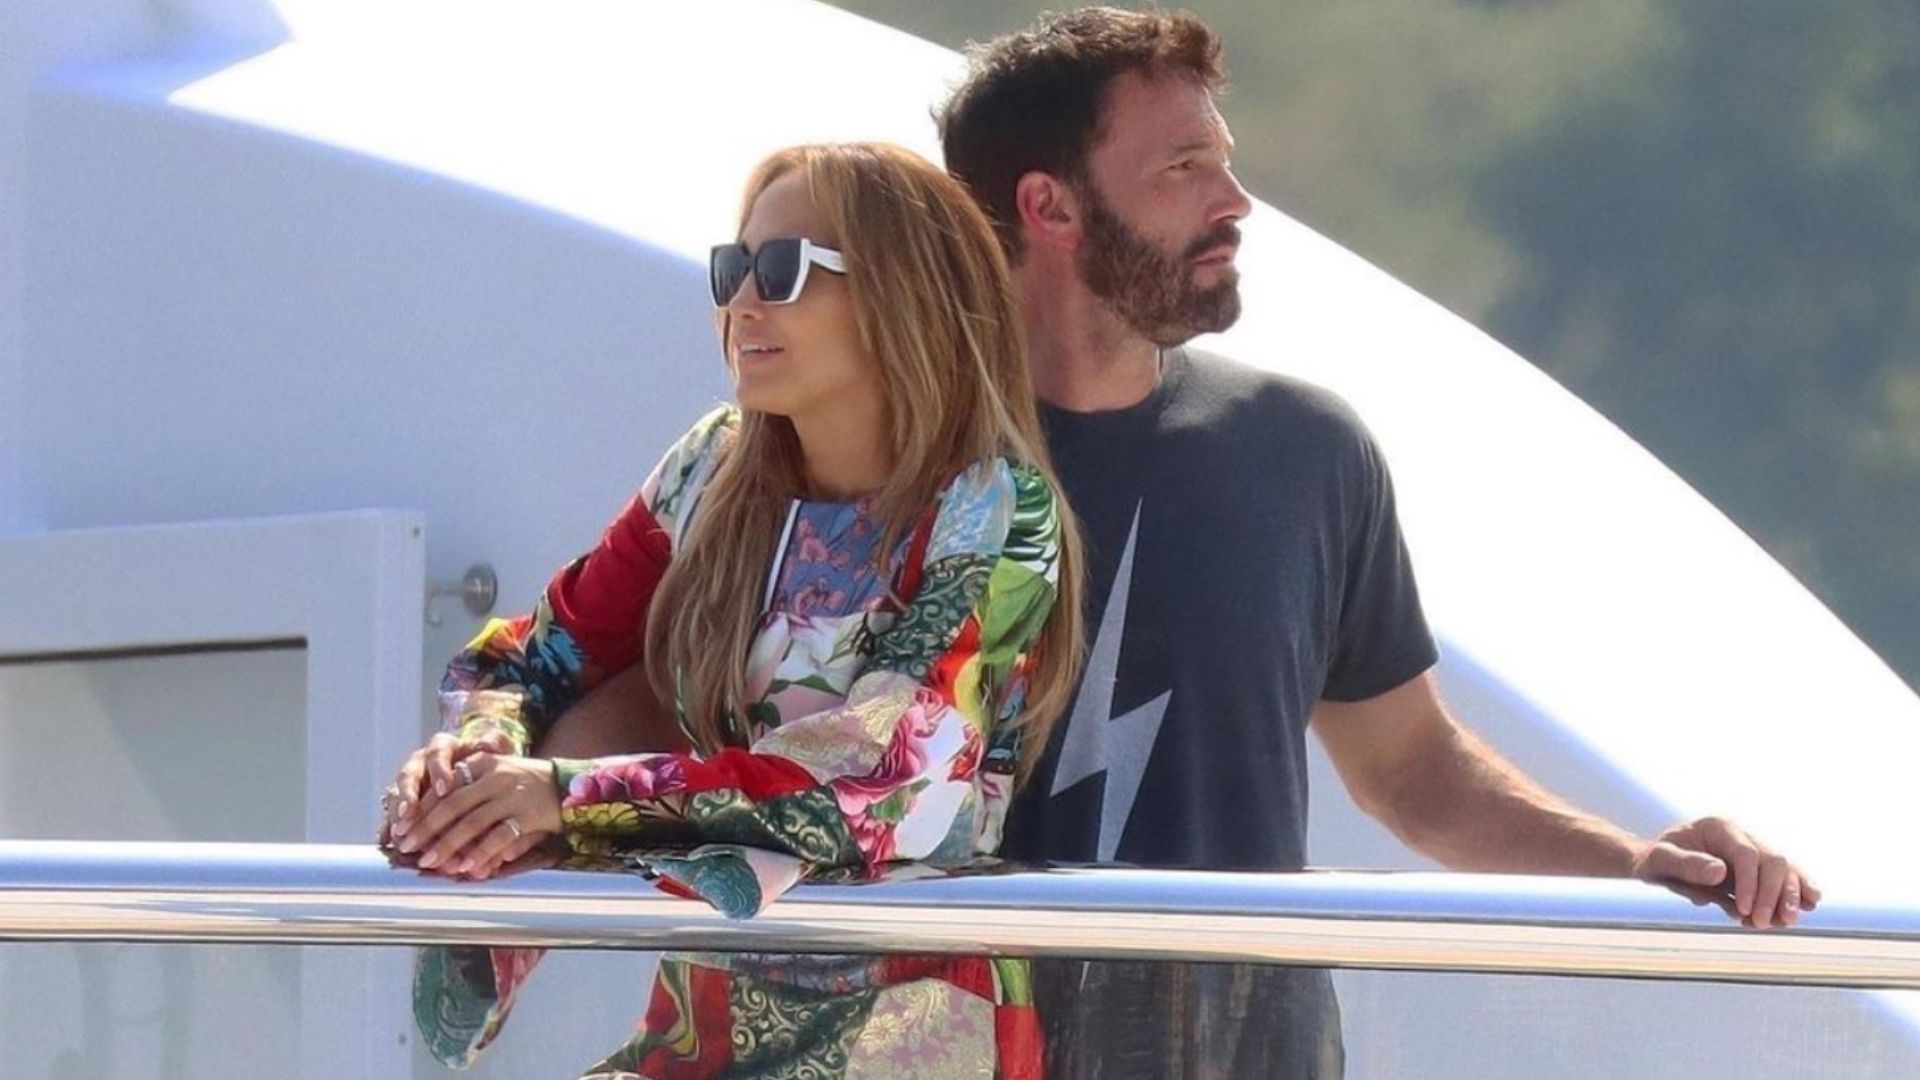 JLO Wearing Andrea Wazen Heels On Her Yacht Date With Ben Affleck